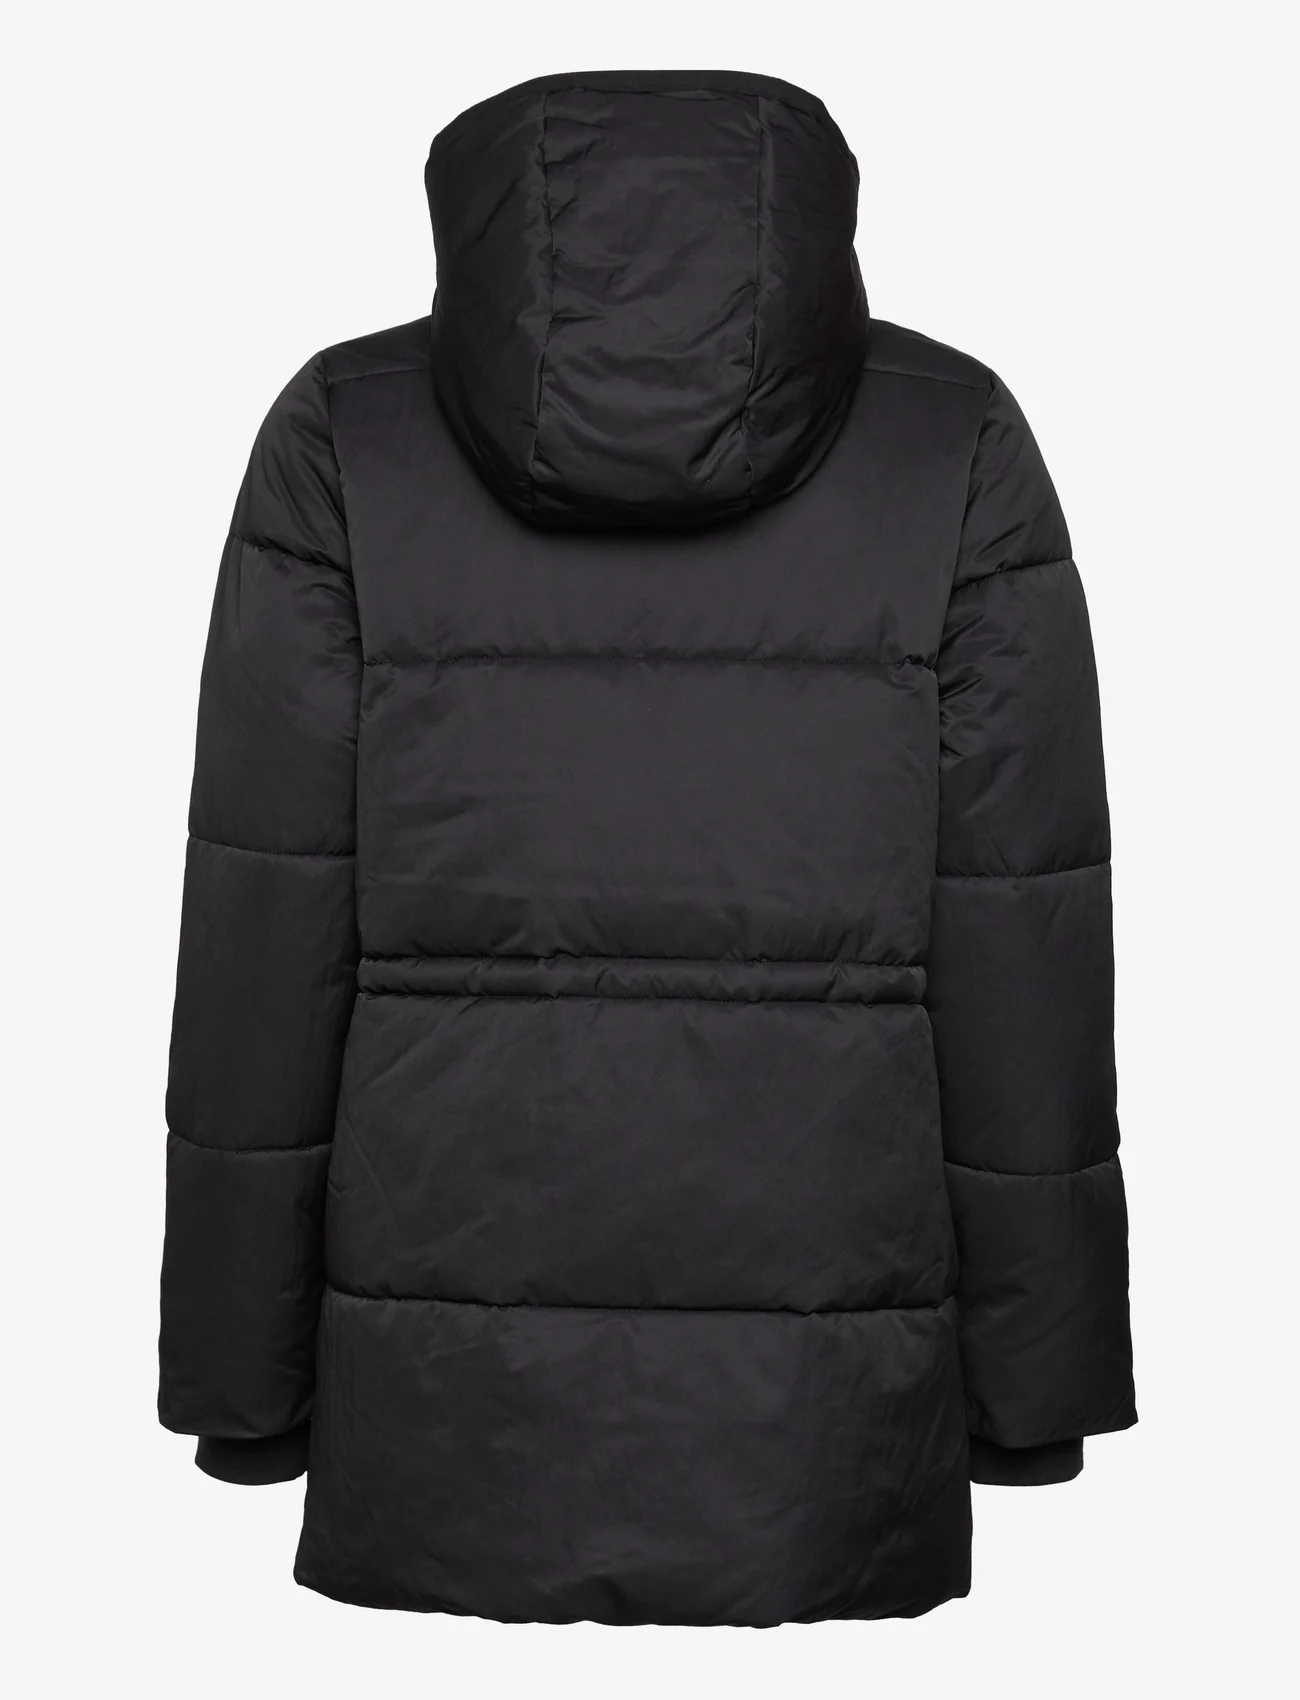 Noa Noa - Heavy outerwear - winter jacket - black - 1